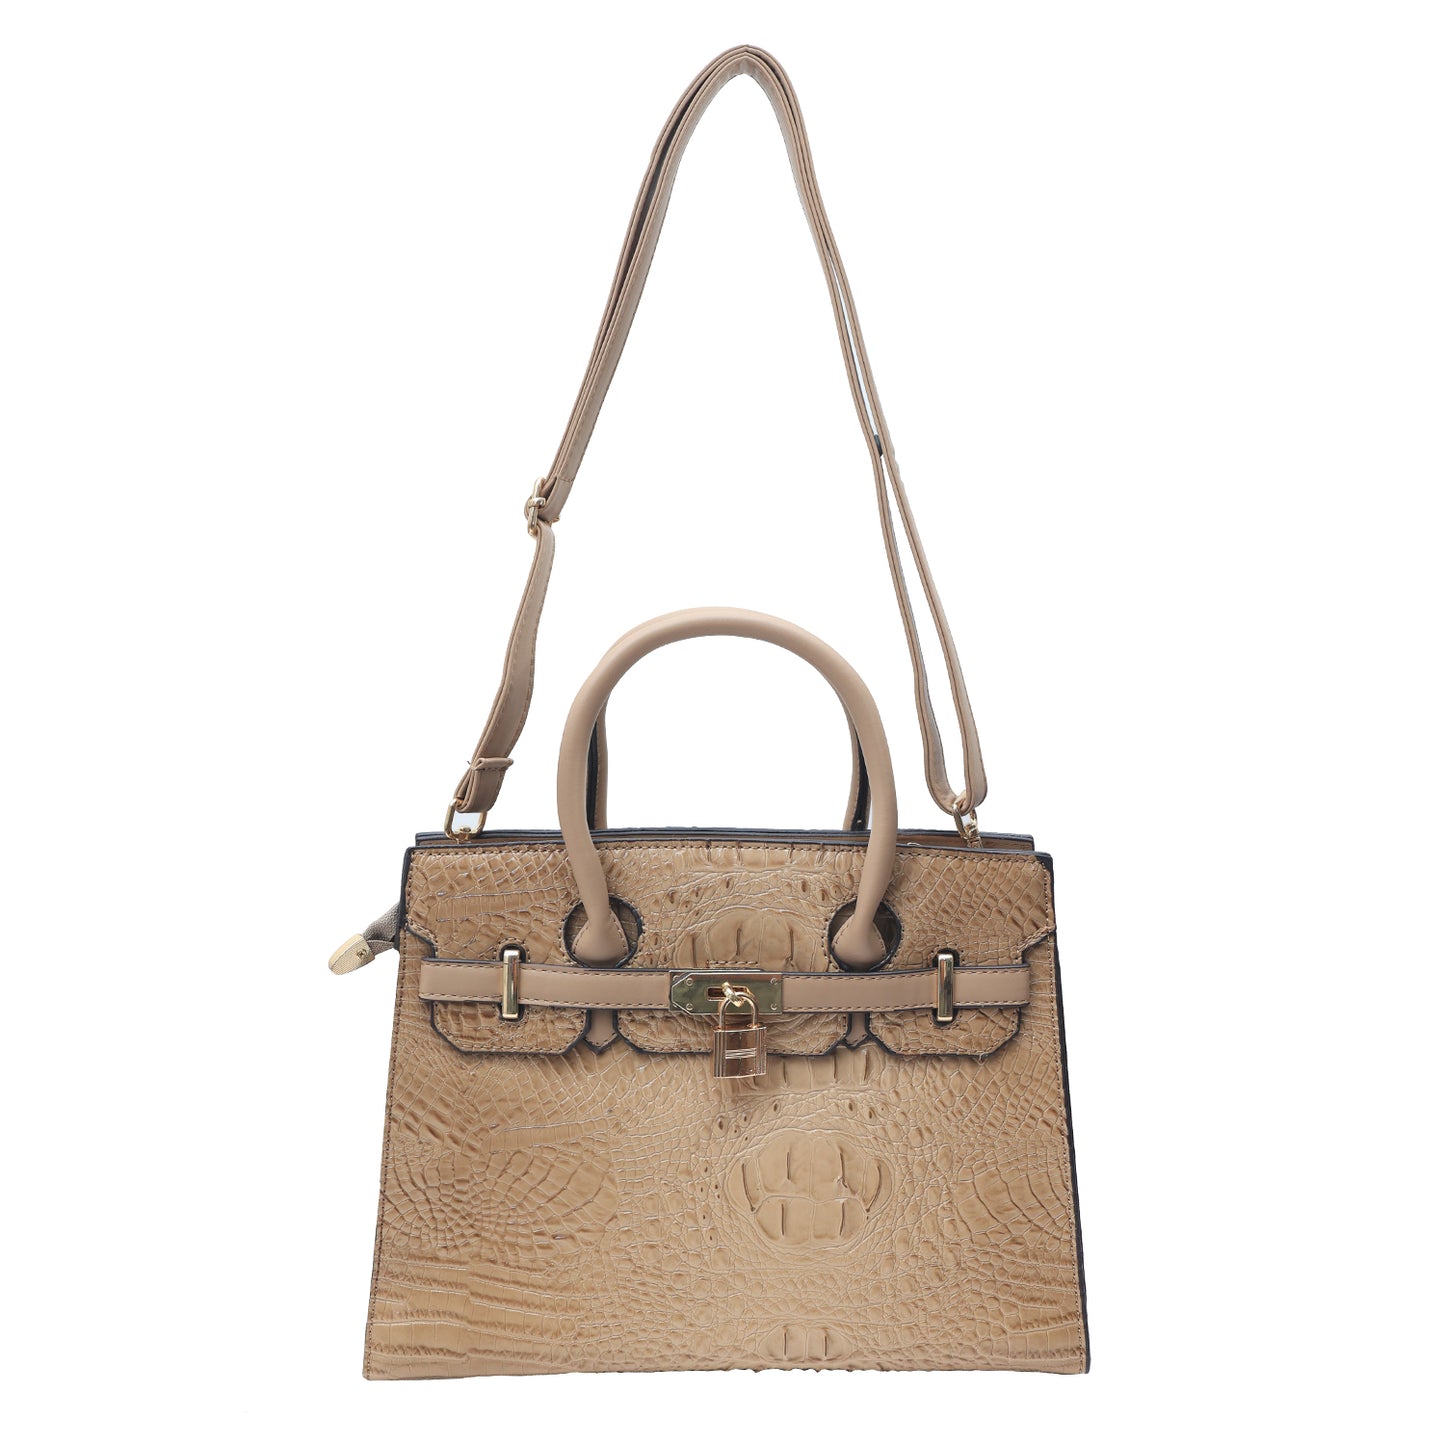 Angeline's Handbag with Lock Design